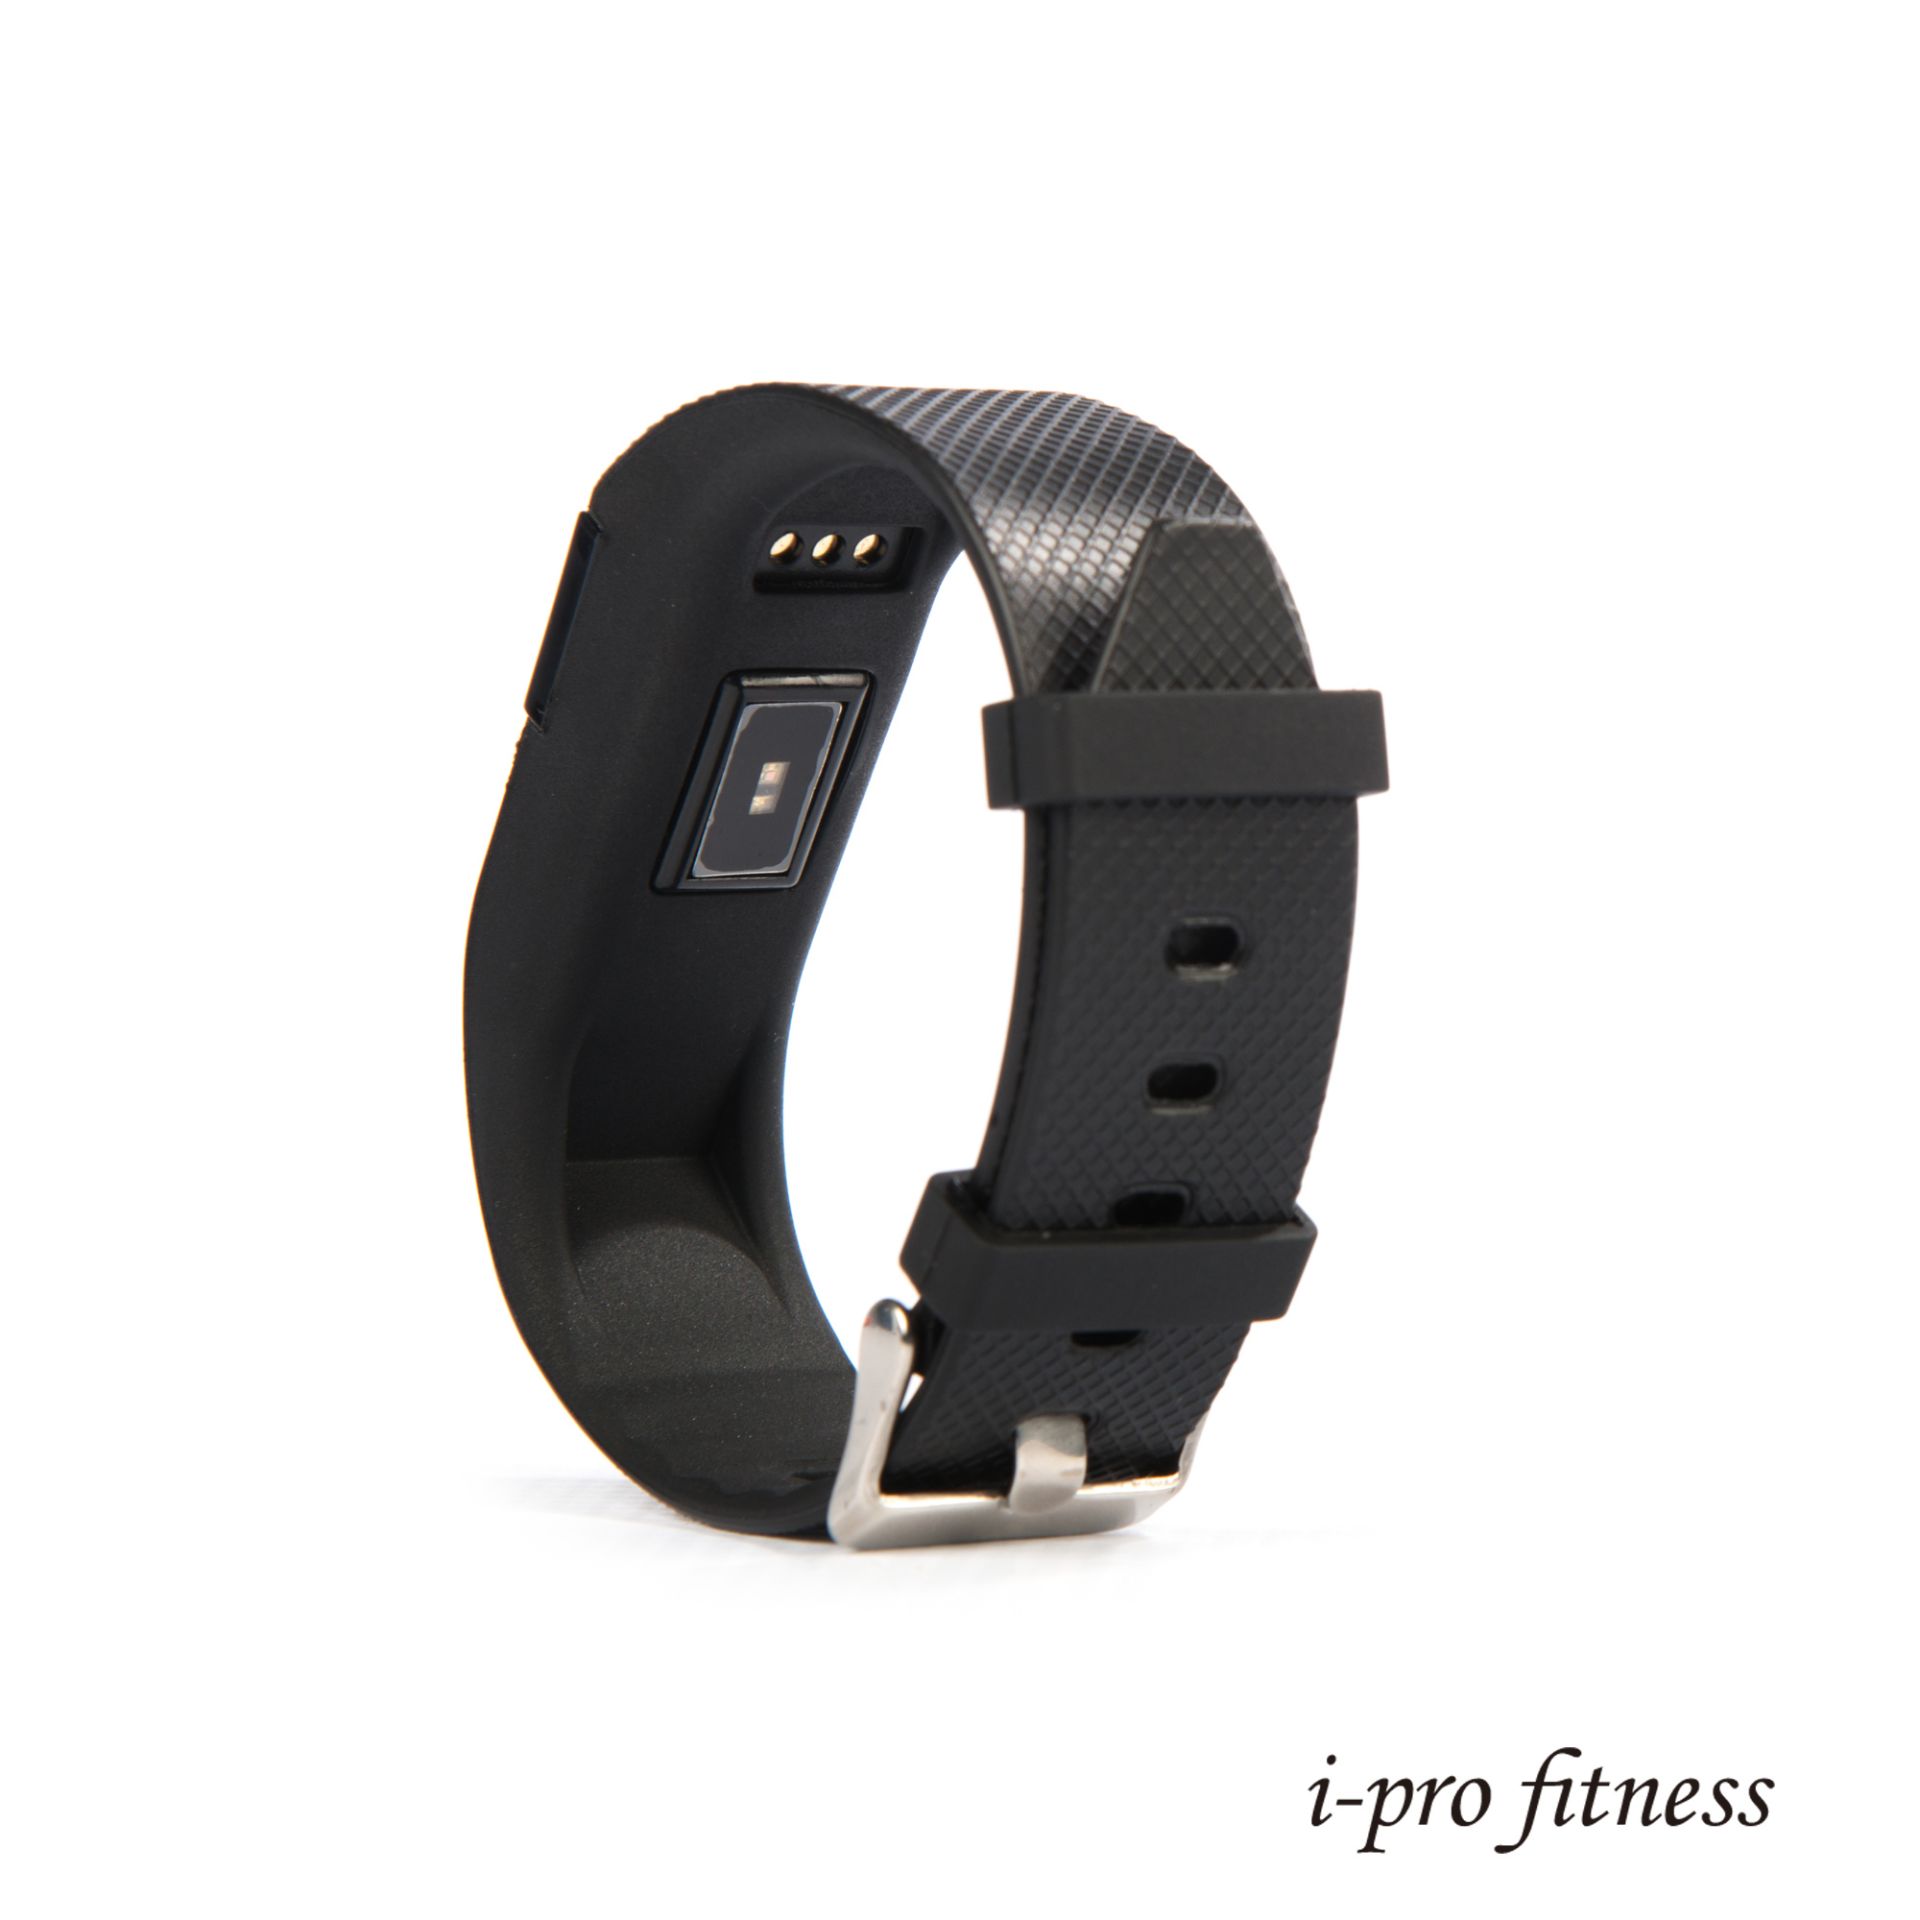 10x Fitness Tracker i-pro fitness, Bluetooth 4.0 Sports Smart Bracelet, Heart Rate Monitor, - Image 8 of 8